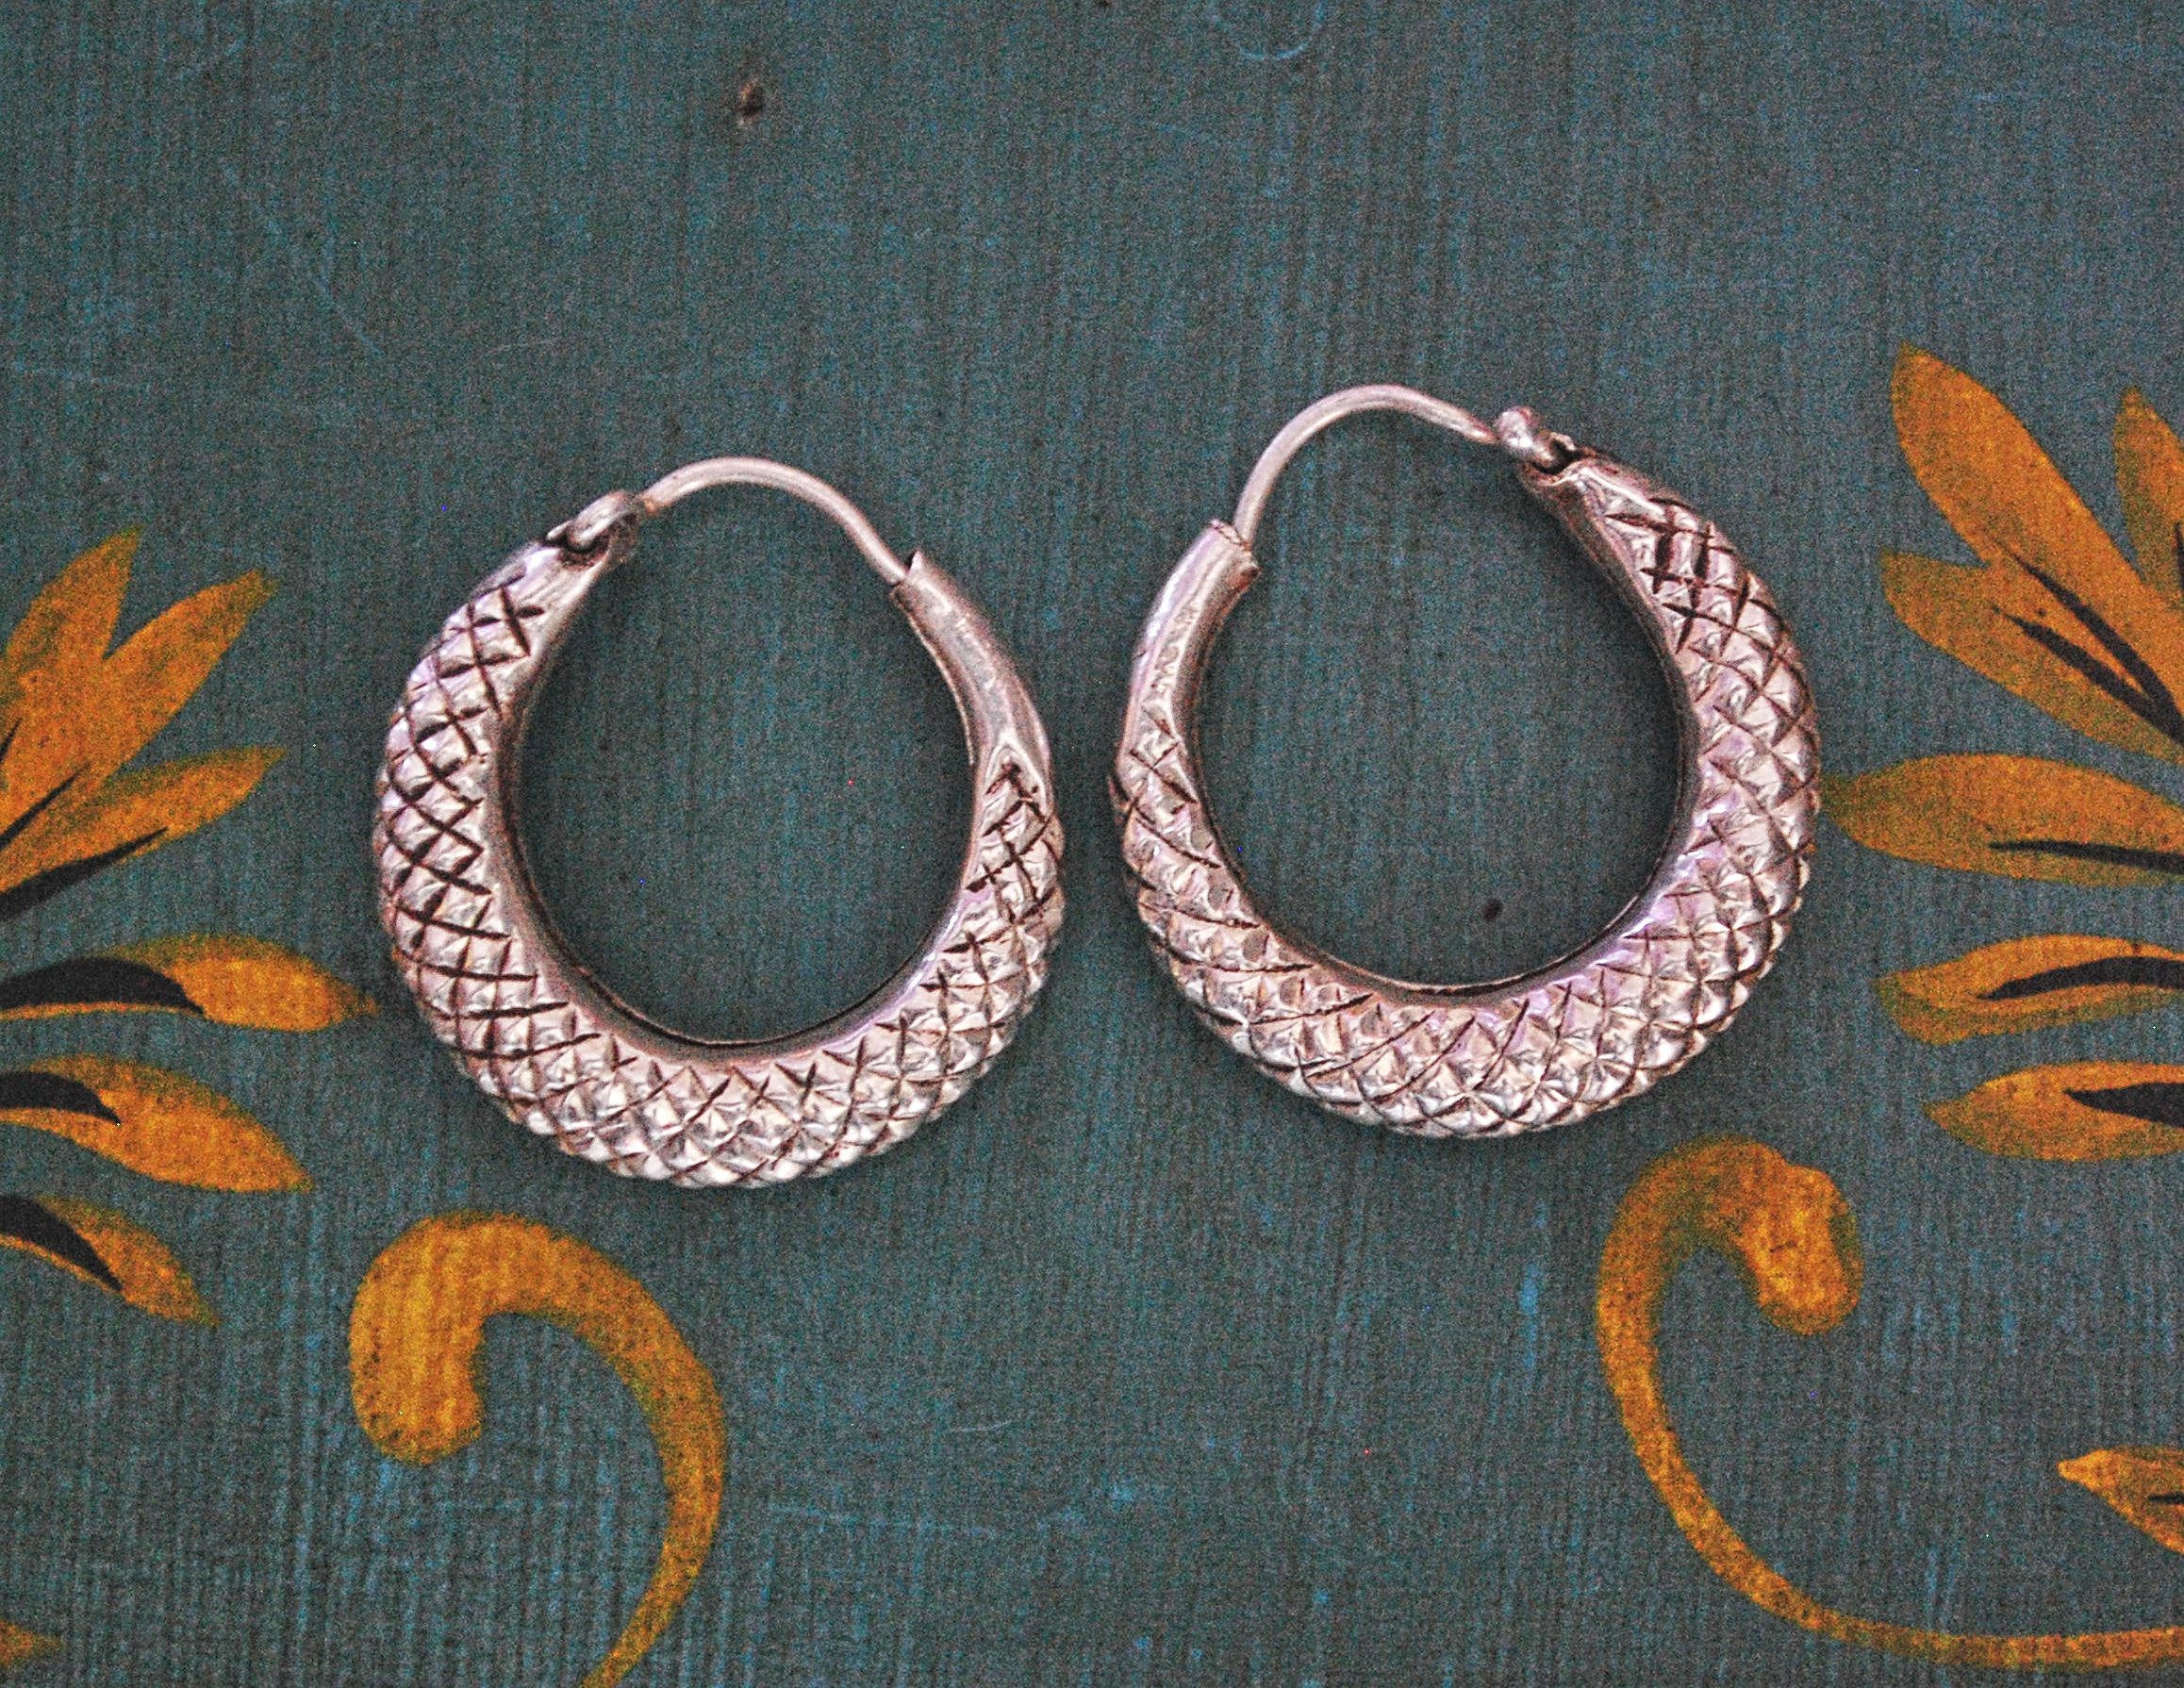 Ethnic Hoop Earrings - Small - Gypsy Hoop Earrings - Ethnic Tribal Hoop Earrings - Boho Jewelry